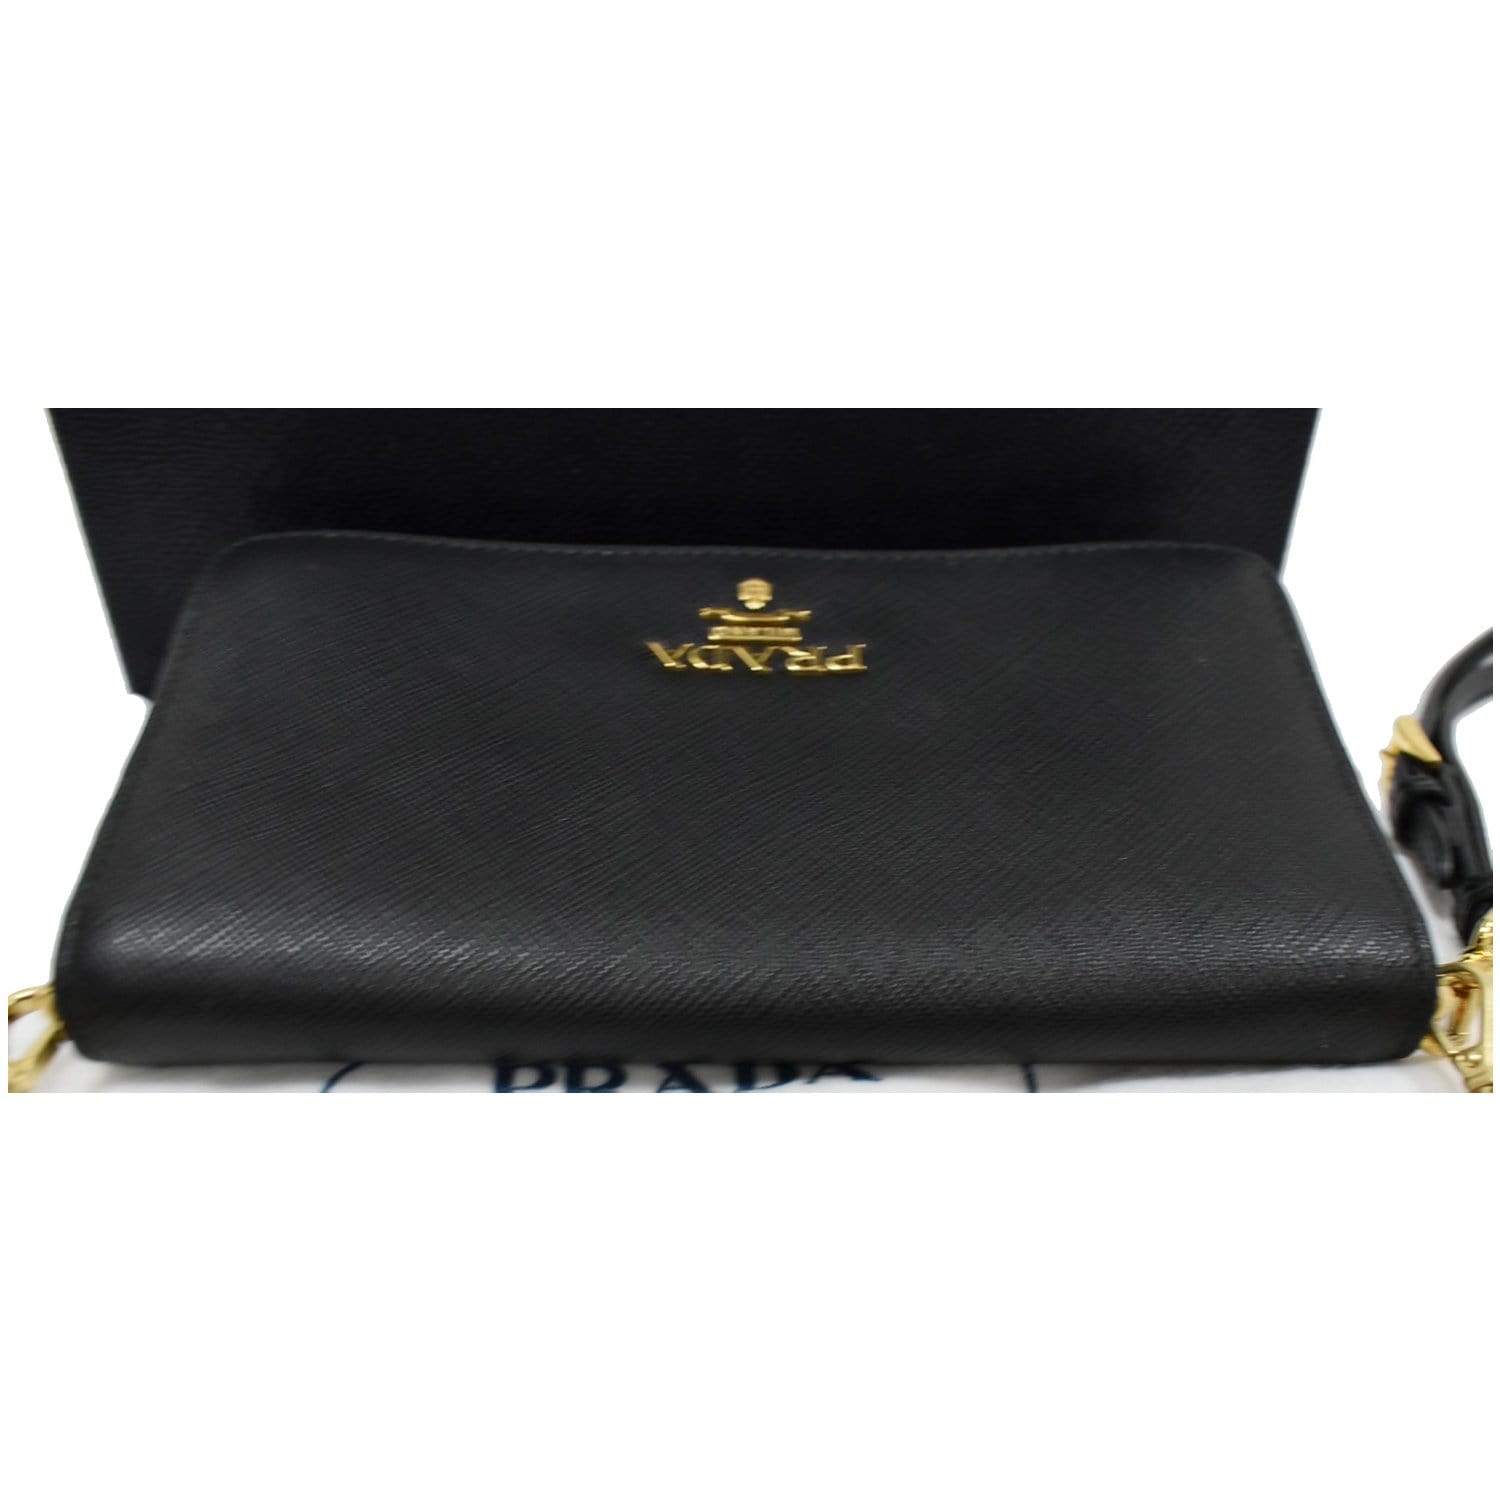 Prada Chain Flap Bag Saffiano Leather Small Black 2087481